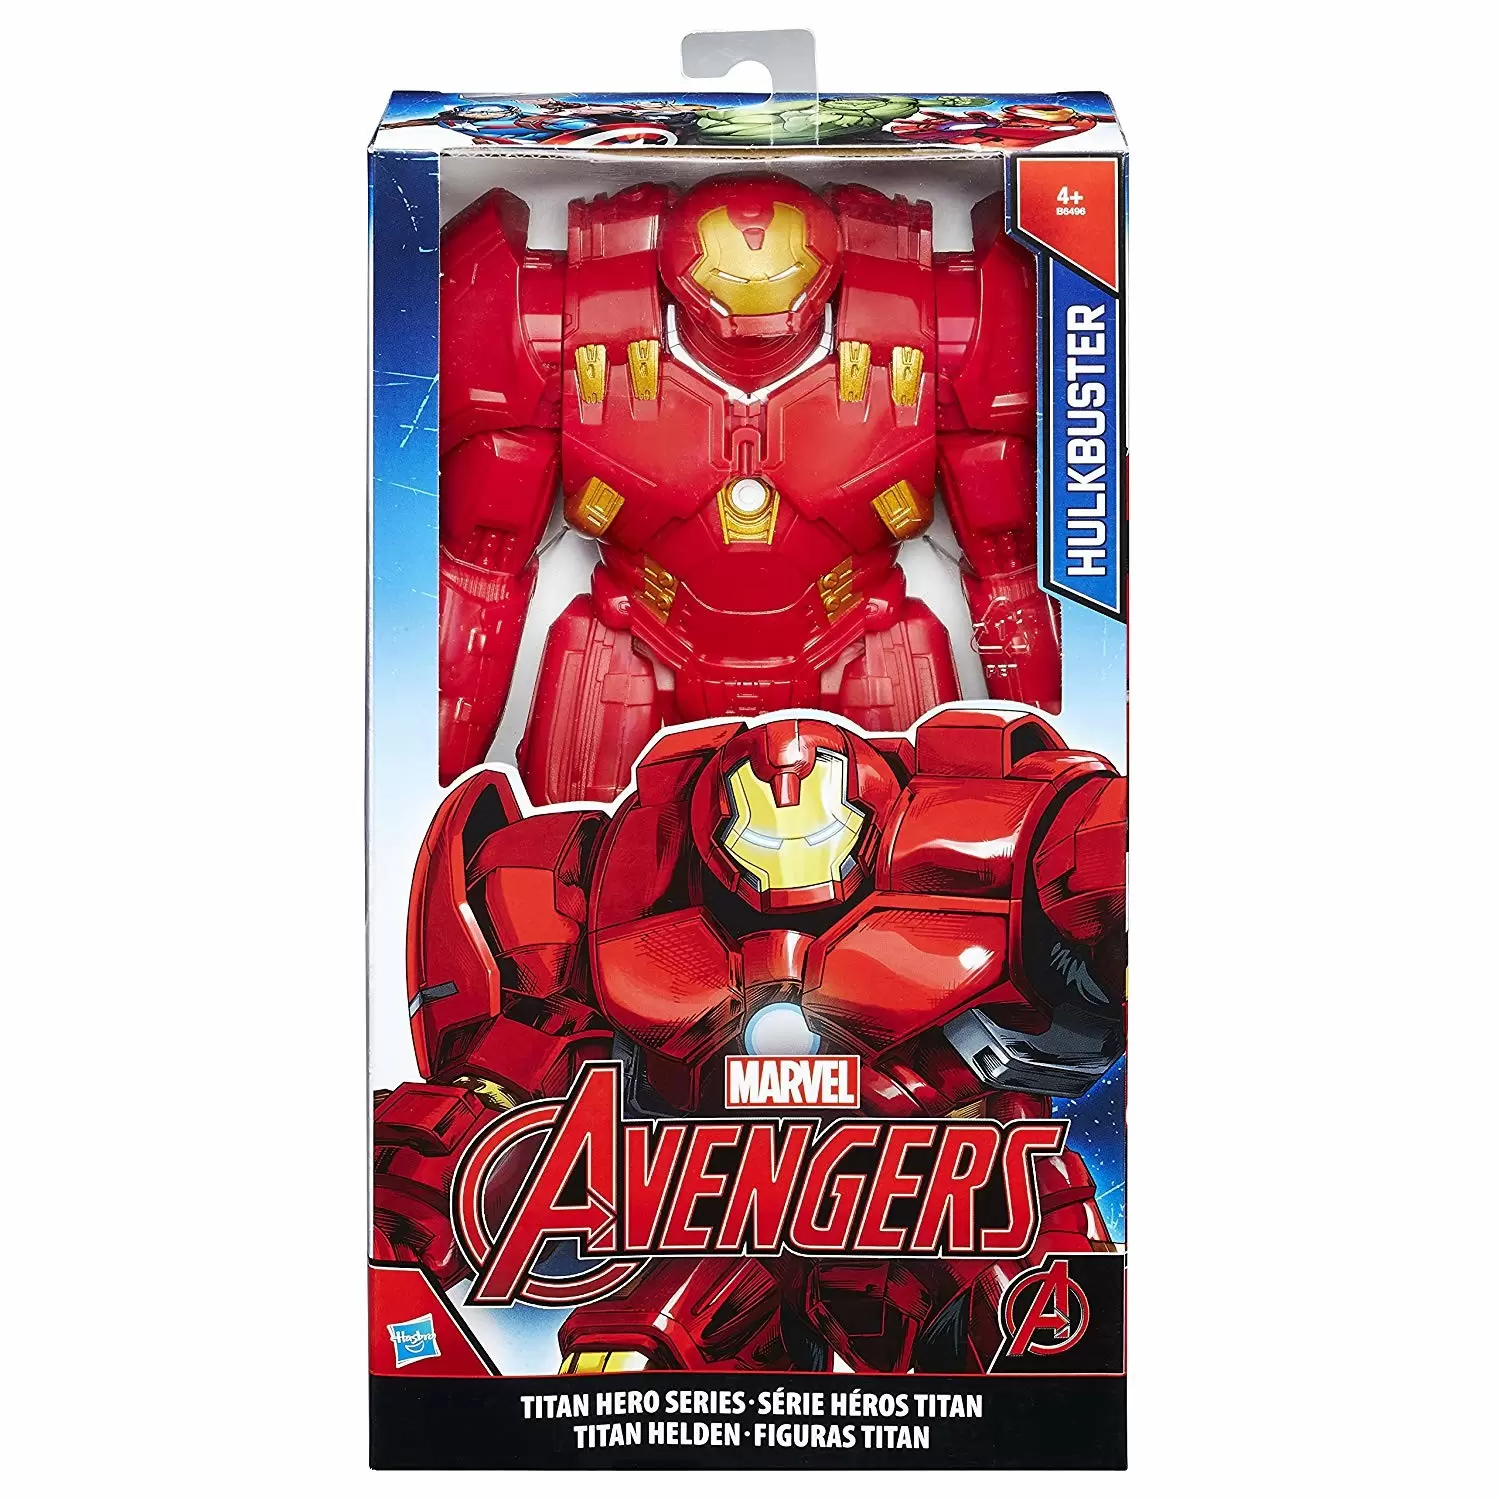 Avengers - Hulkbuster - Titan Hero Series action figure